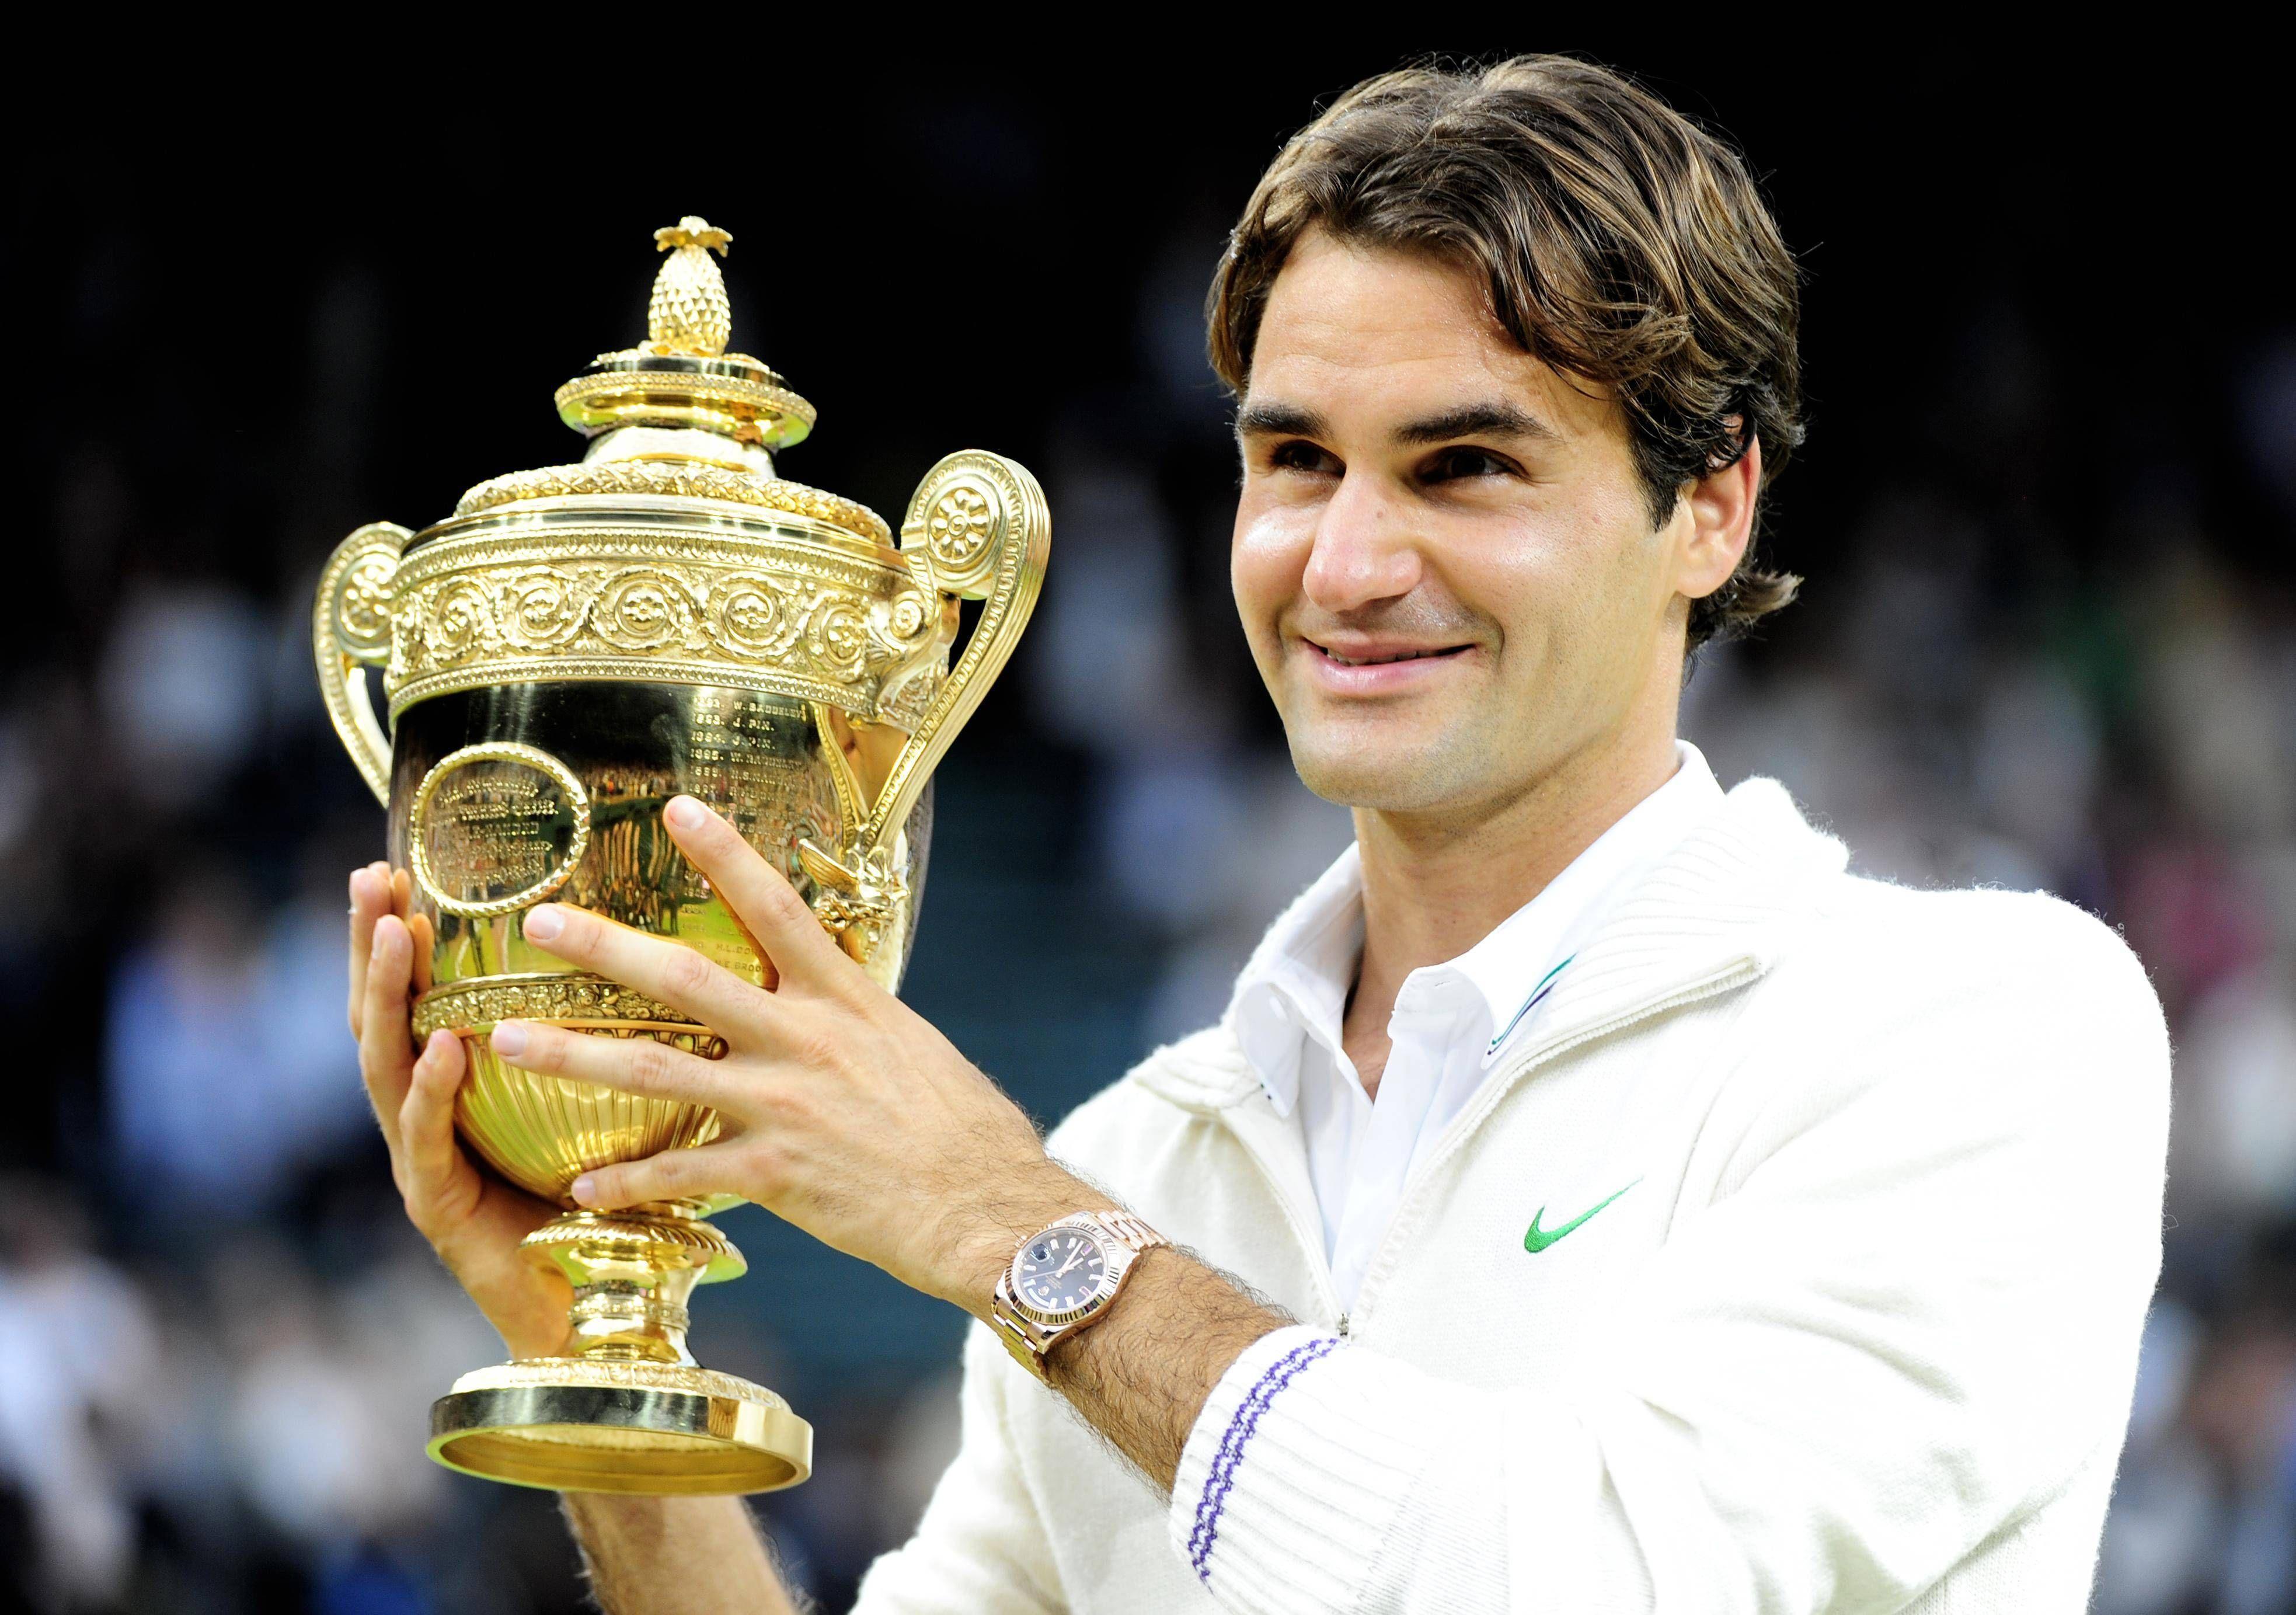 HD Roger Federer Wallpaper and Photo. HD Celebrities Wallpaper